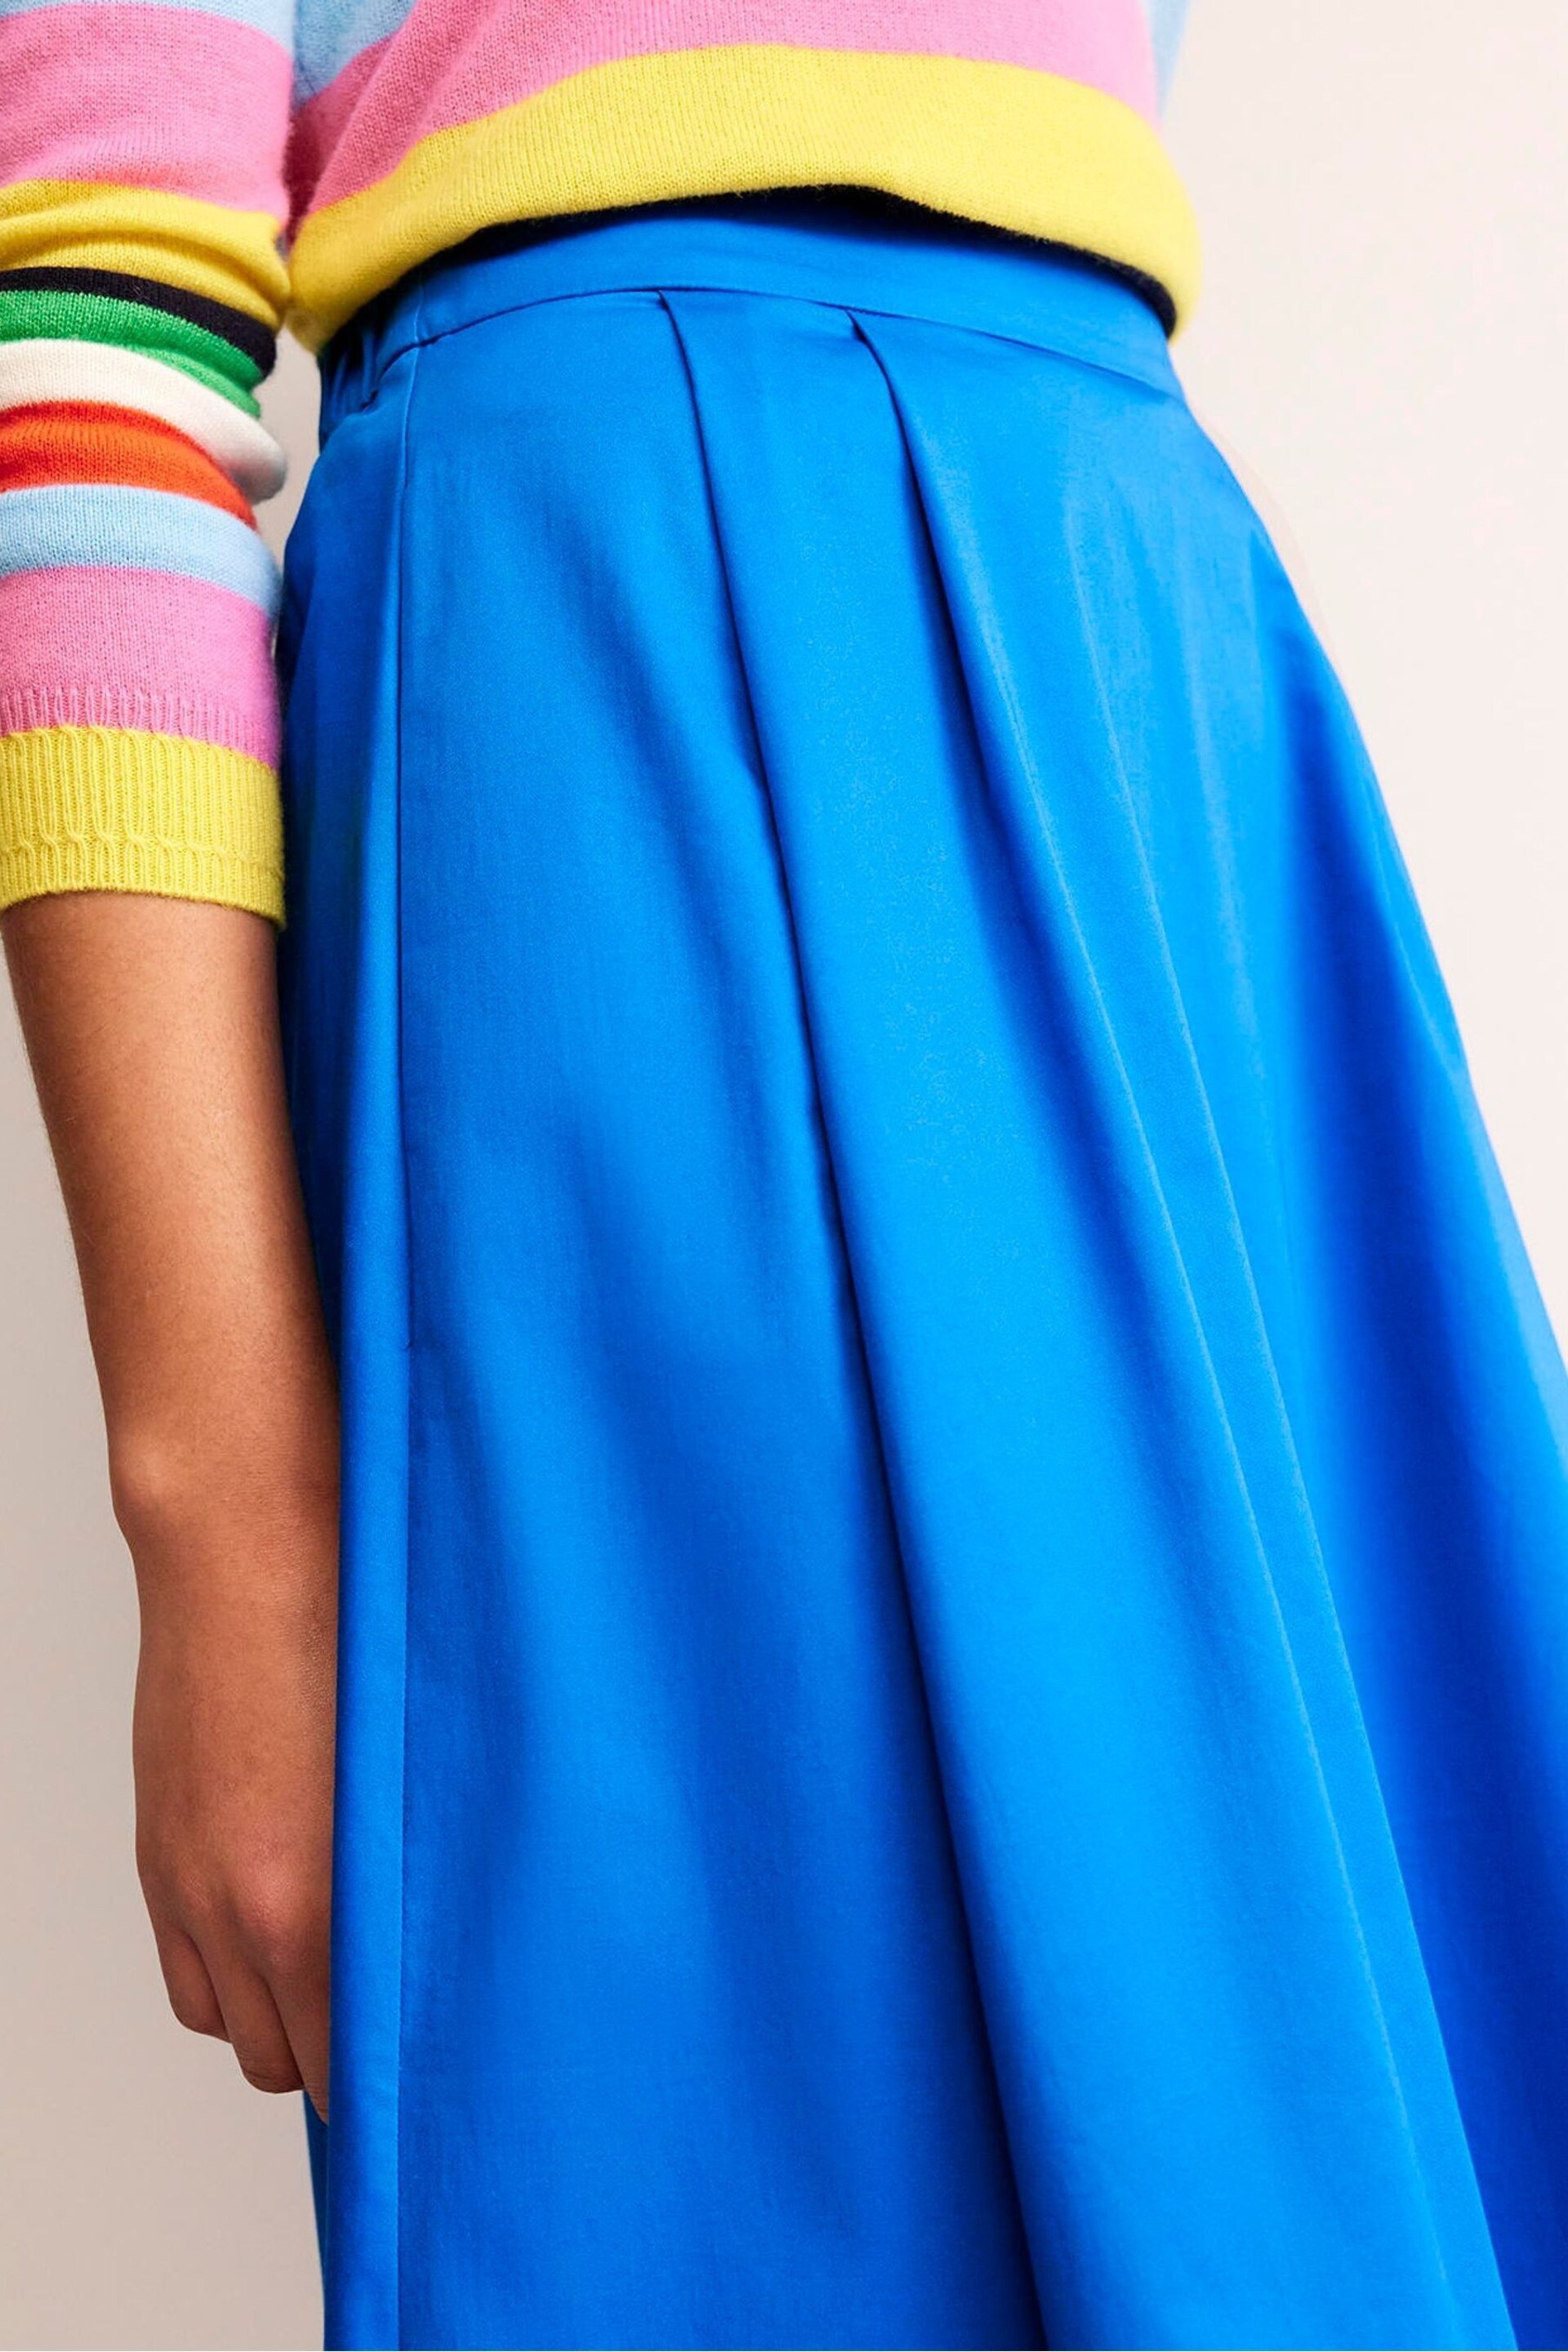 Boden Blue Isabella Cotton Sateen Skirt - Image 1 of 5